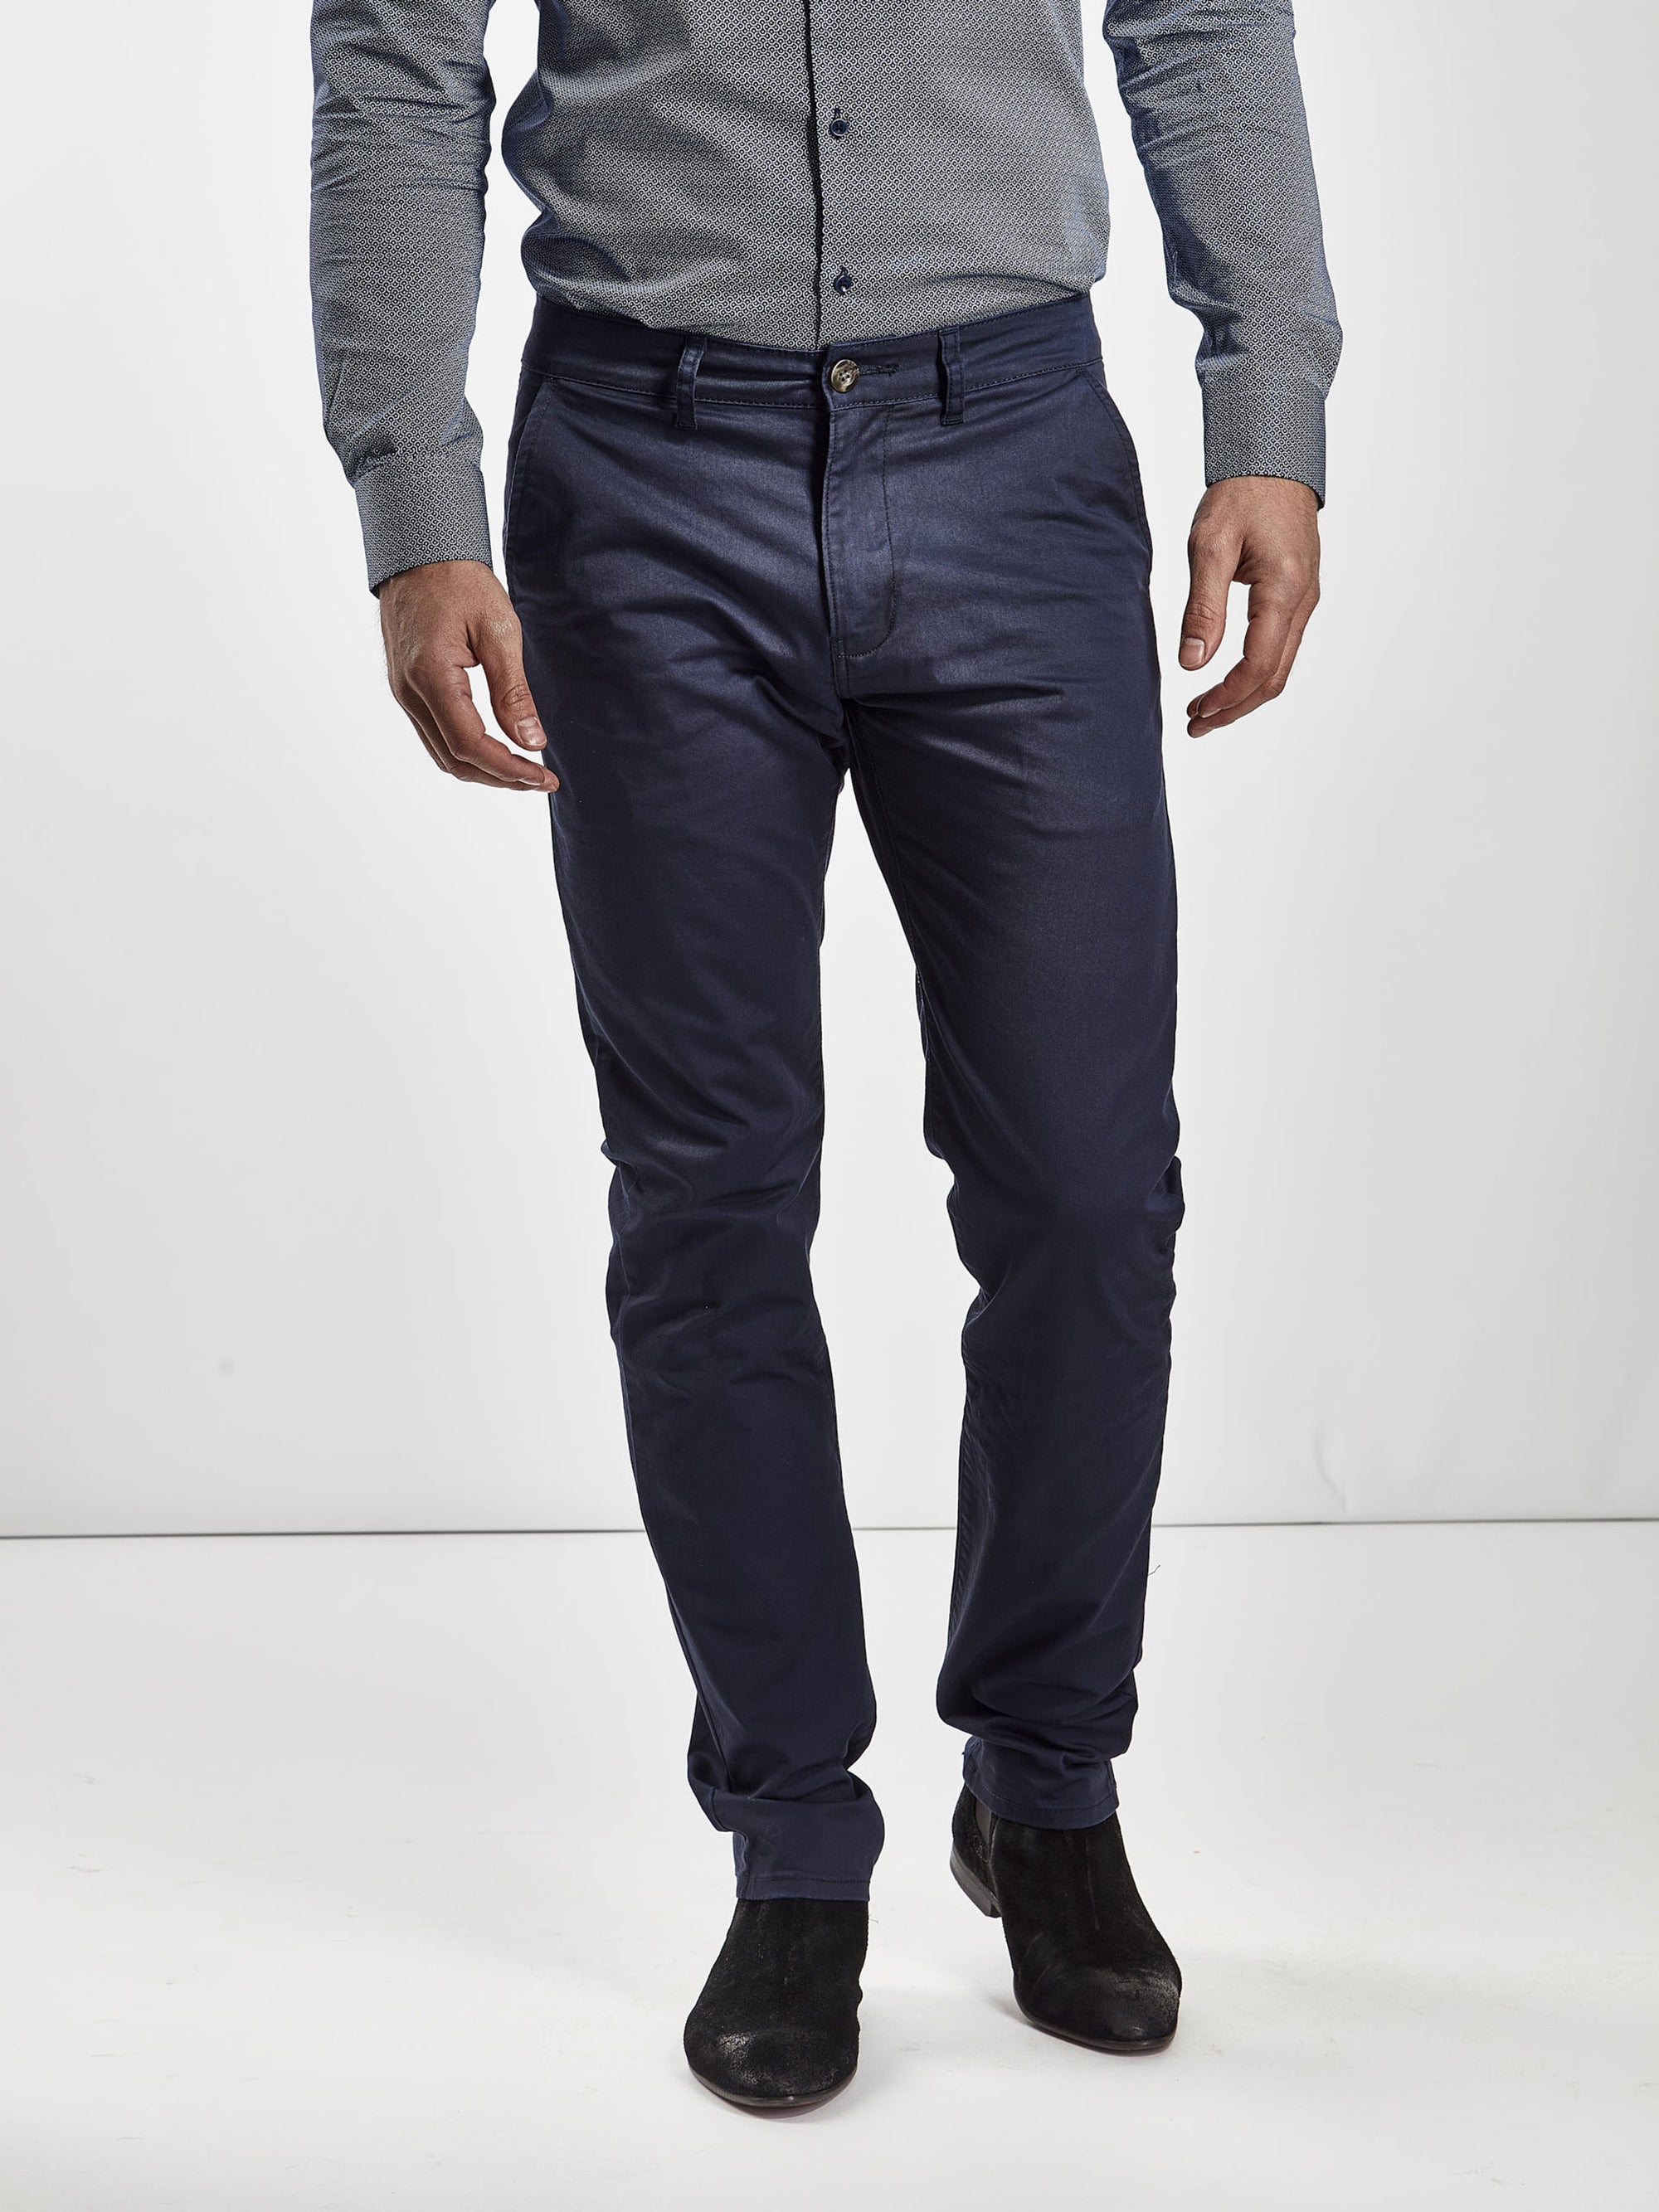 Cotton stretch mens chino trouser cobalt blue mish mash jeans